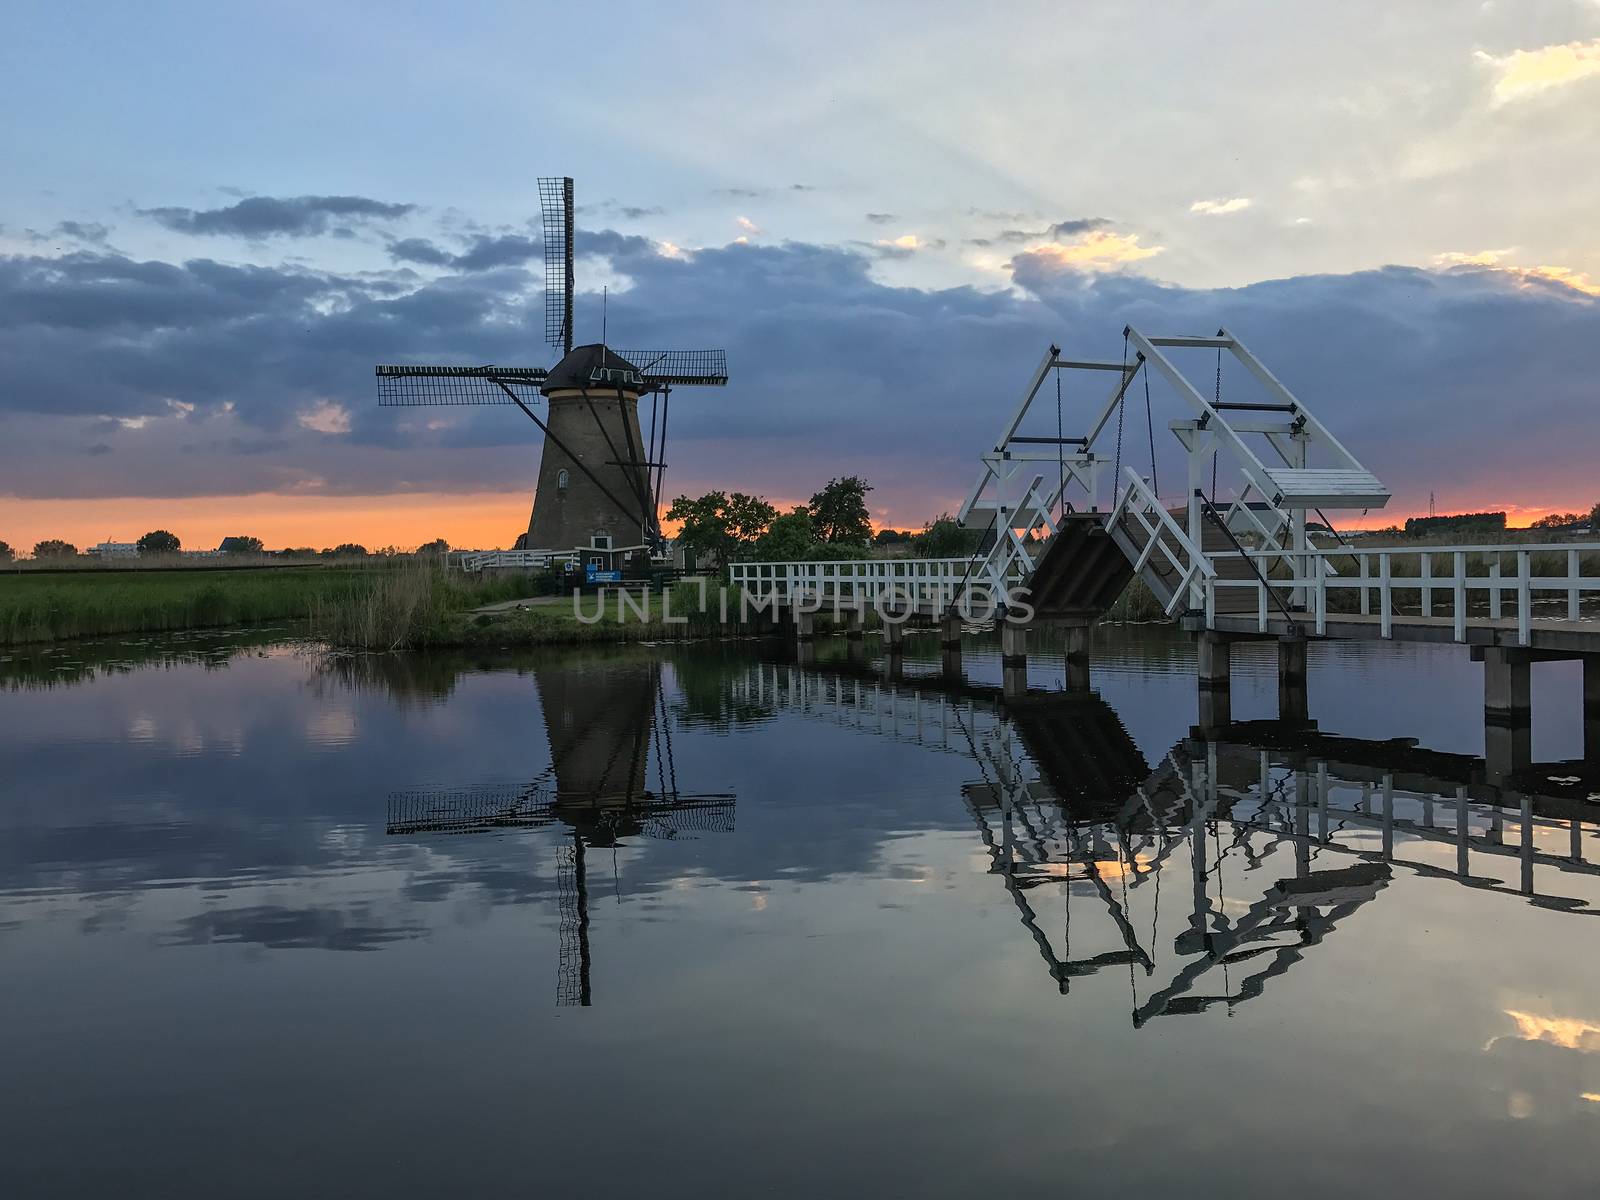 The Kinderdijk windmills by Kartouchken